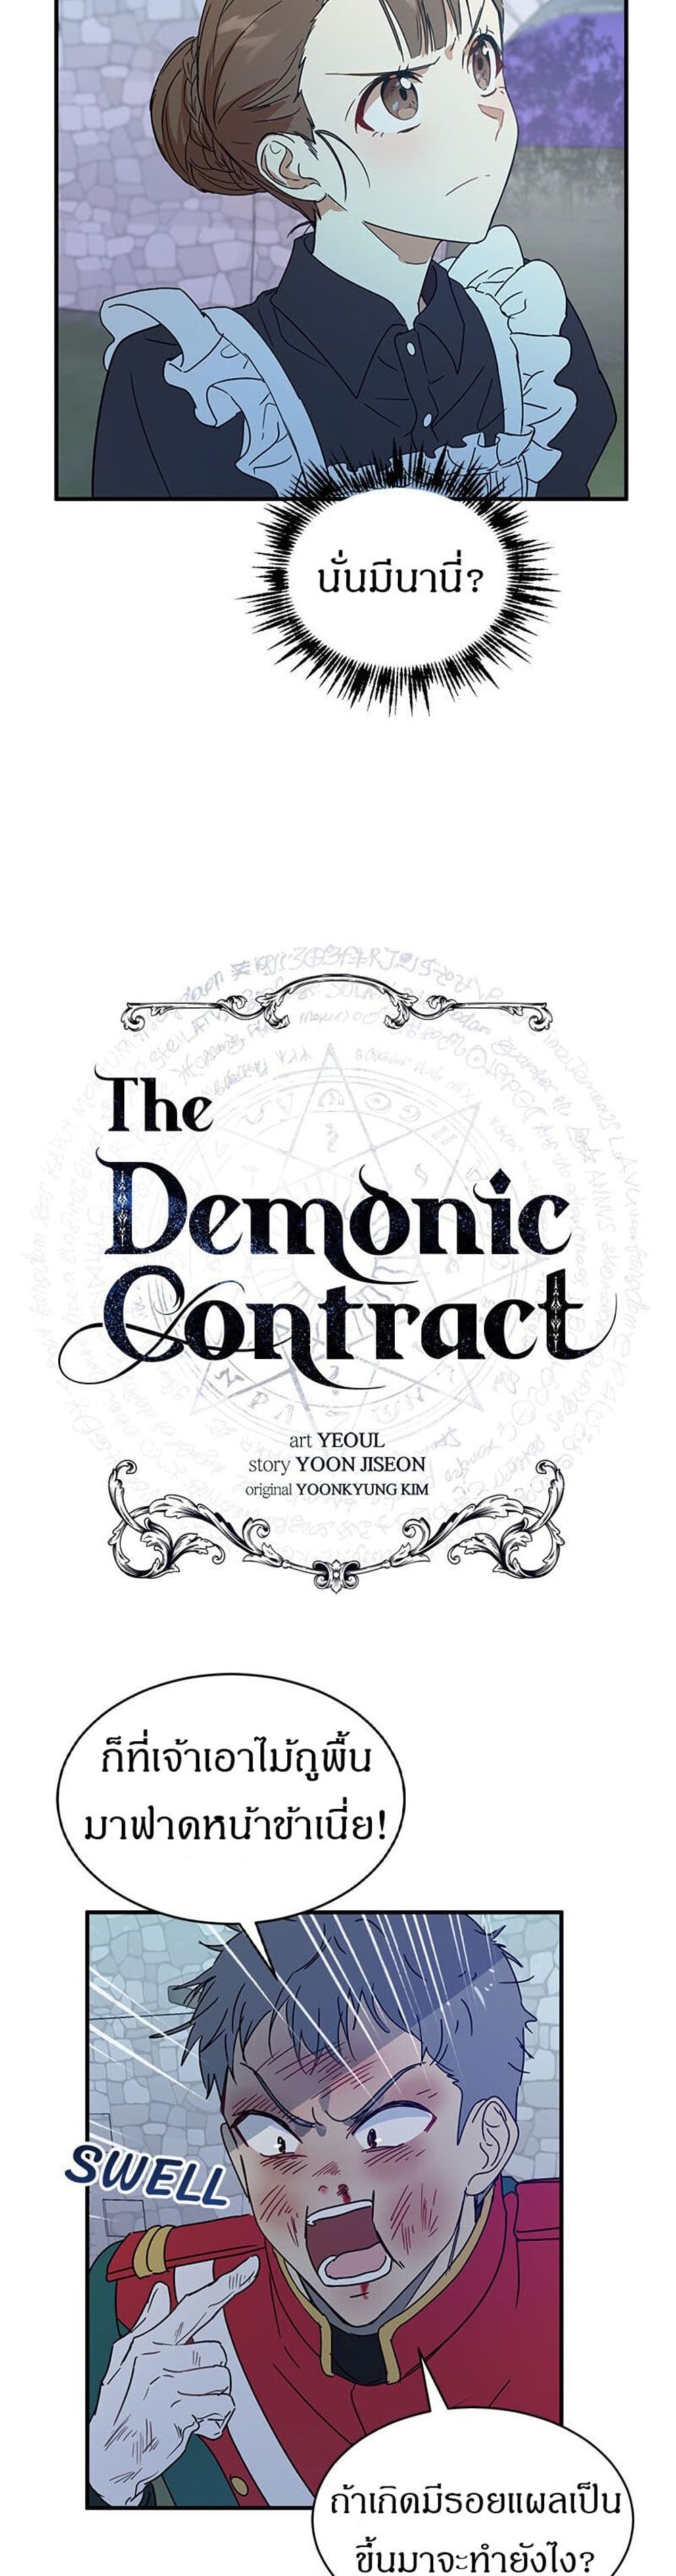 The Demonic Contract 20-20